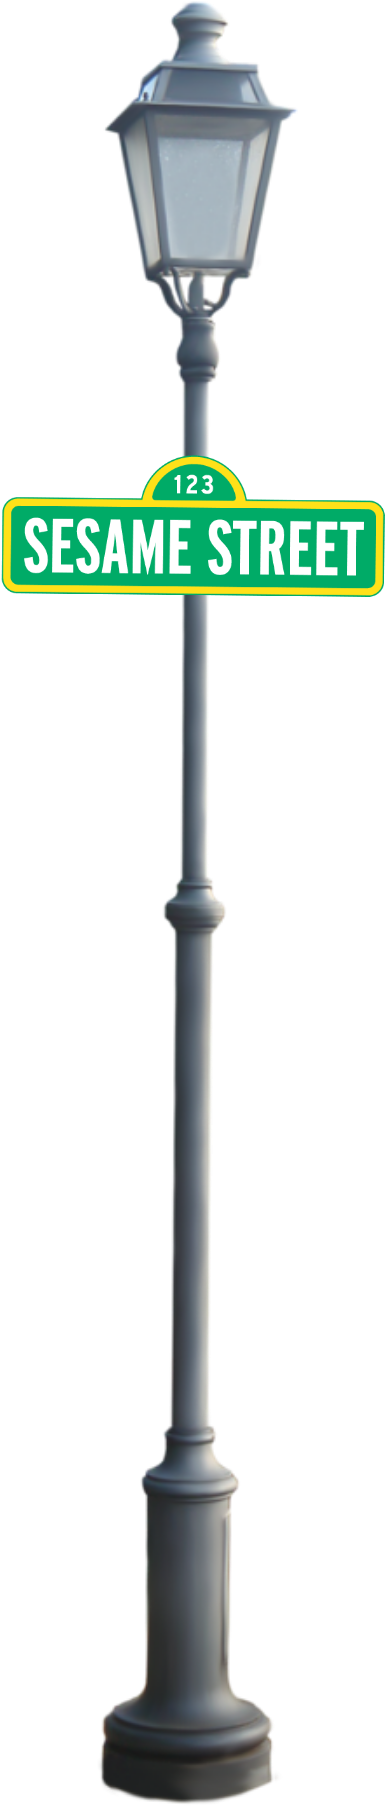 Sesame Street Light Pole Png - Sesame Street (1024x1024), Png Download